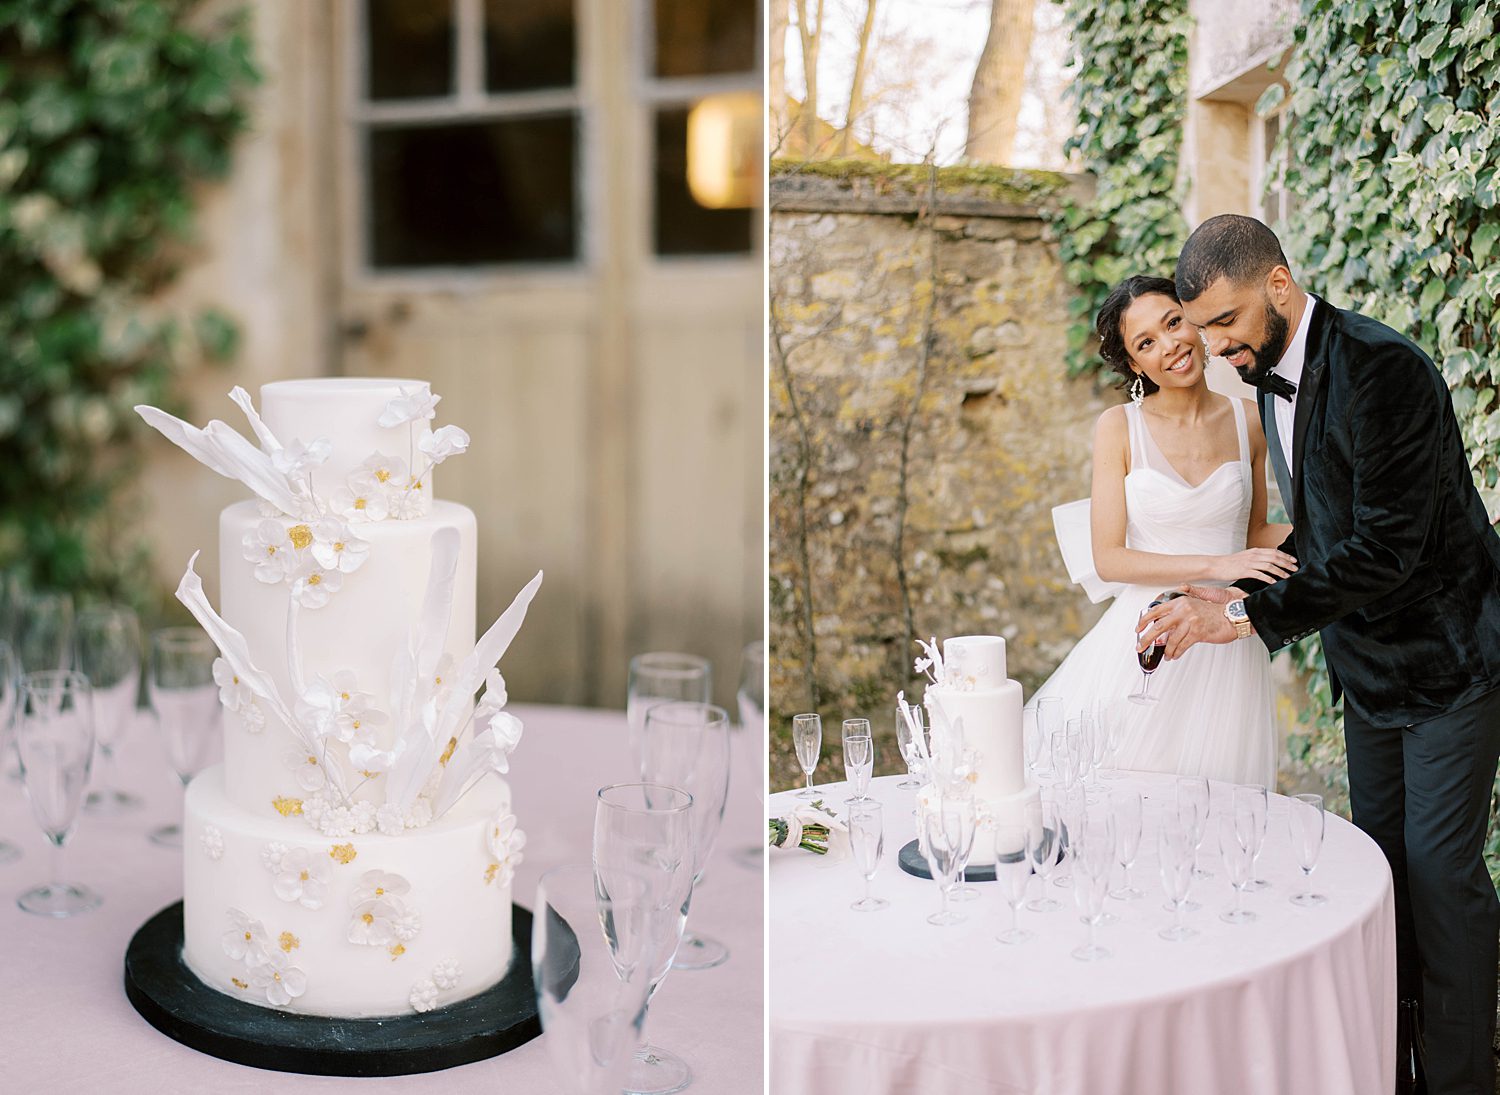 newlyweds cut wedding cake during reception at Chateau de Villette